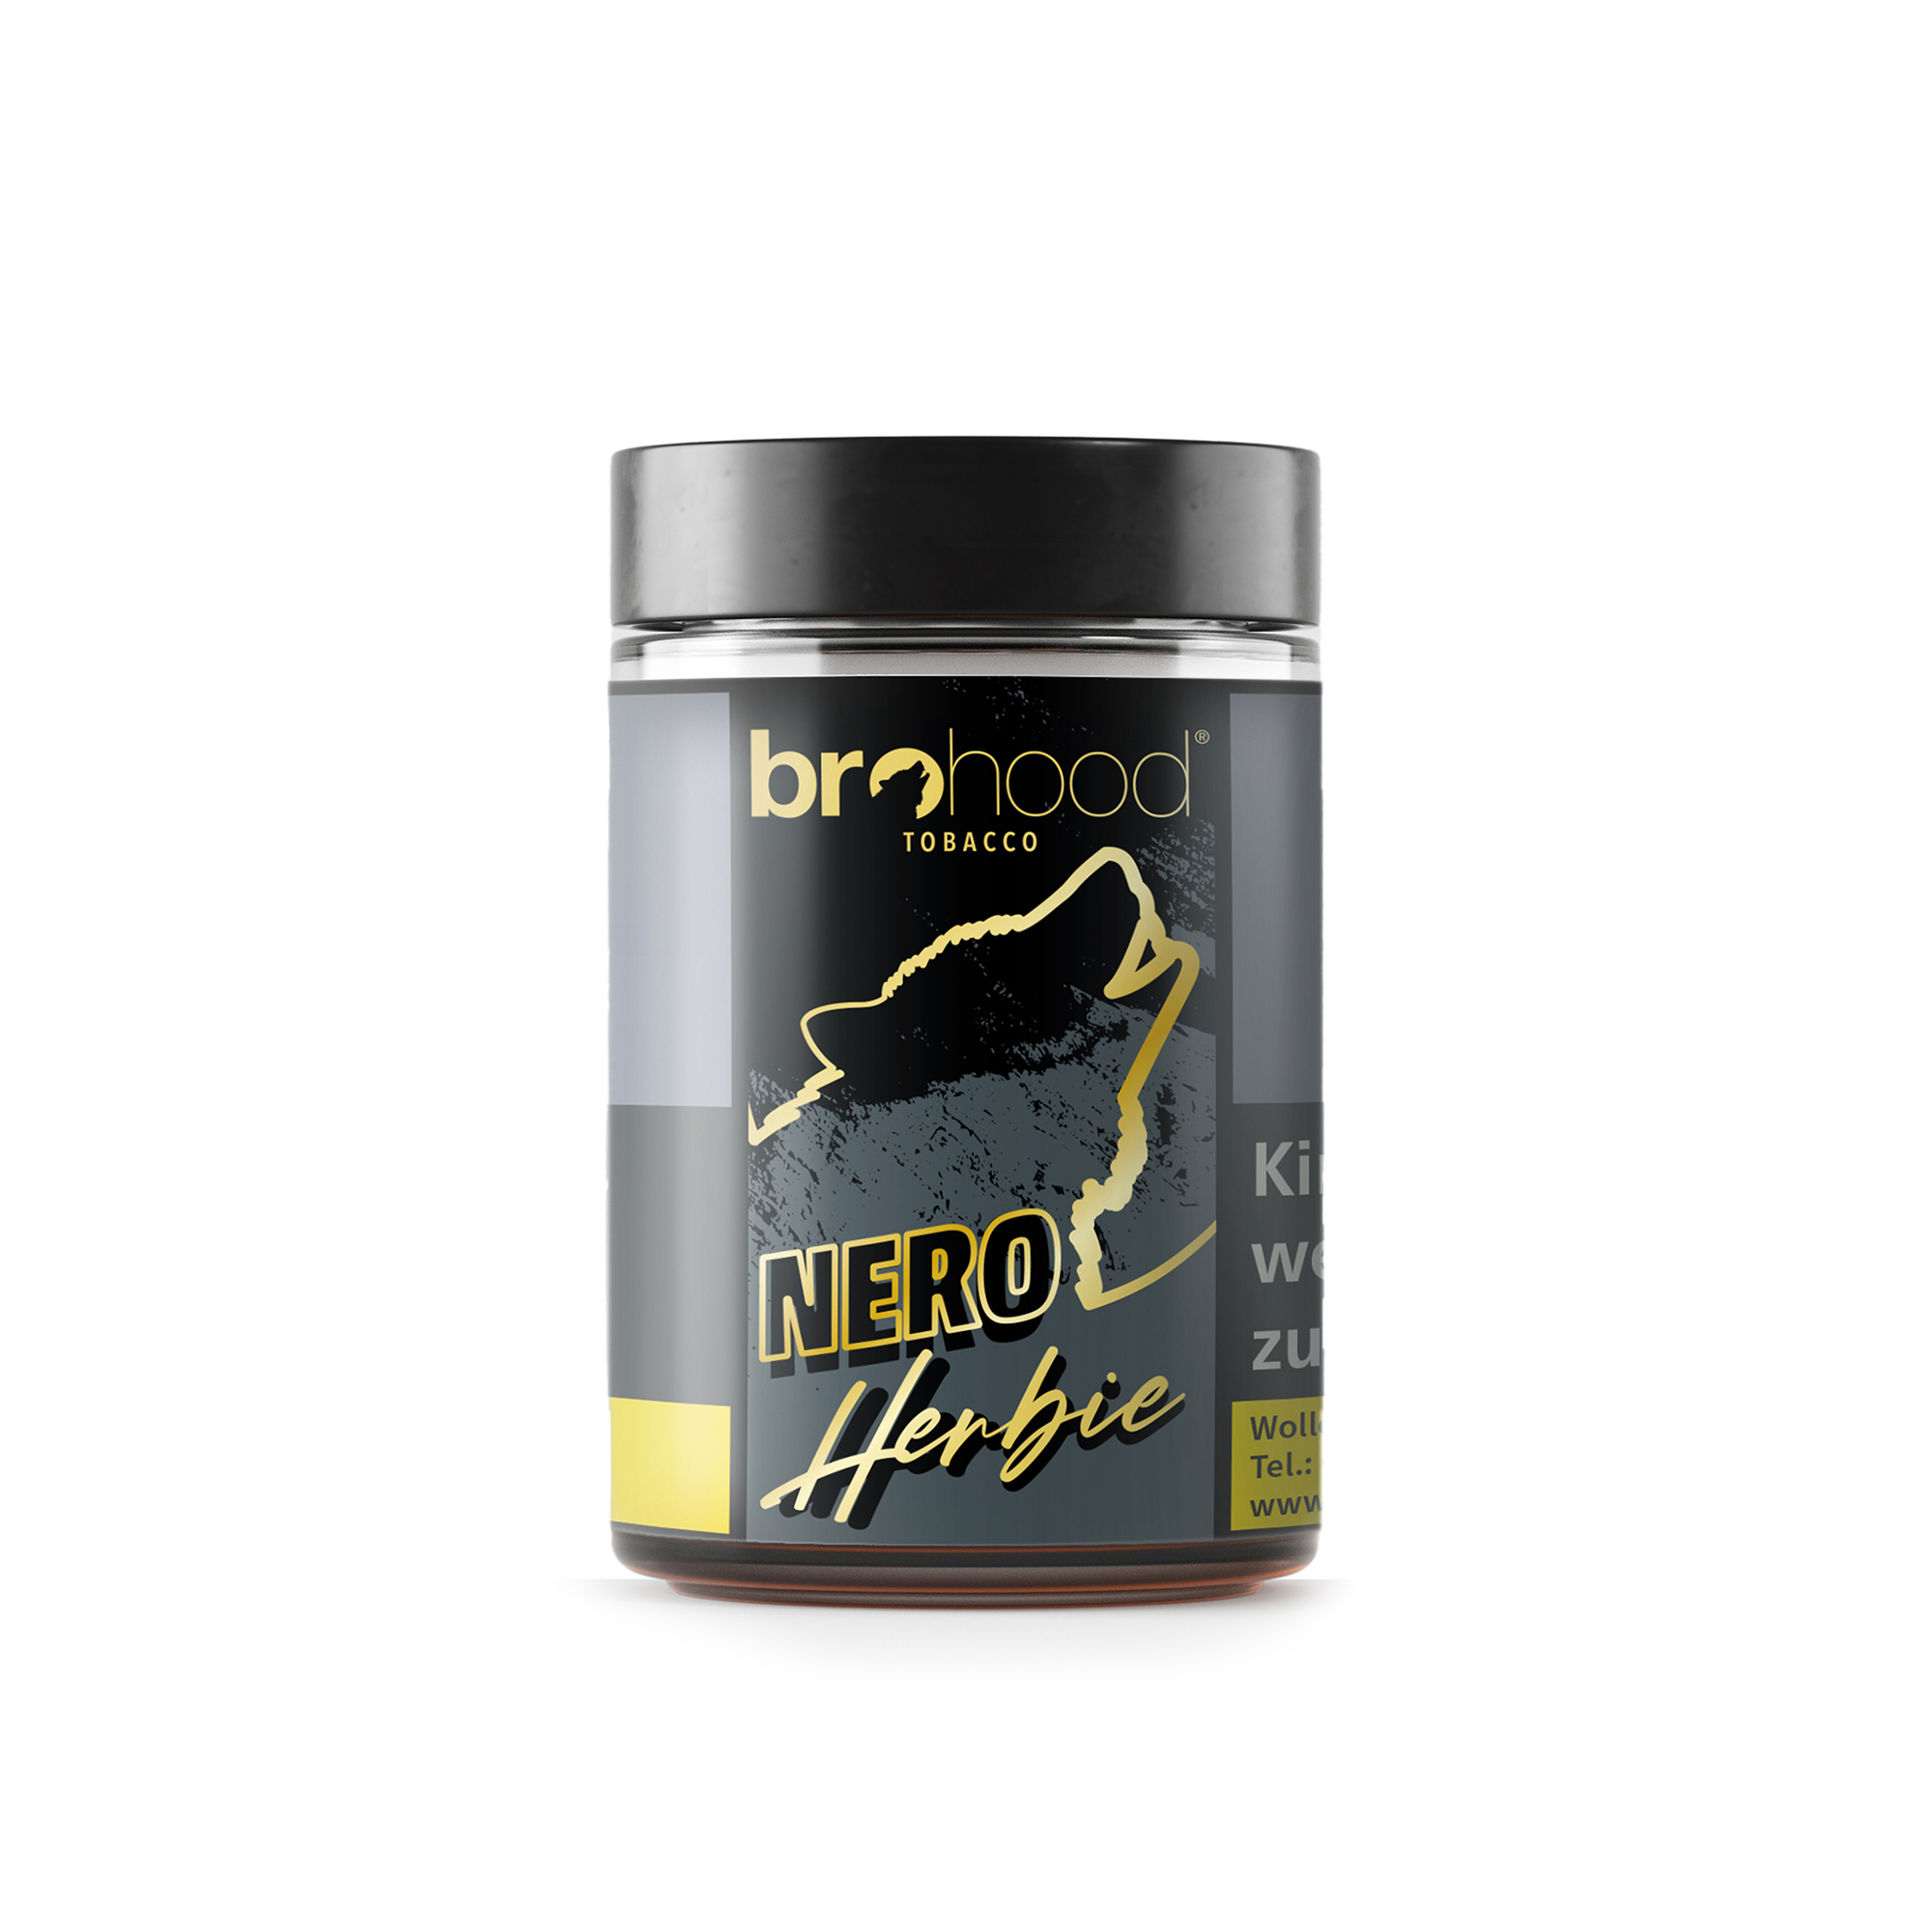 Brohood Nero Herbie